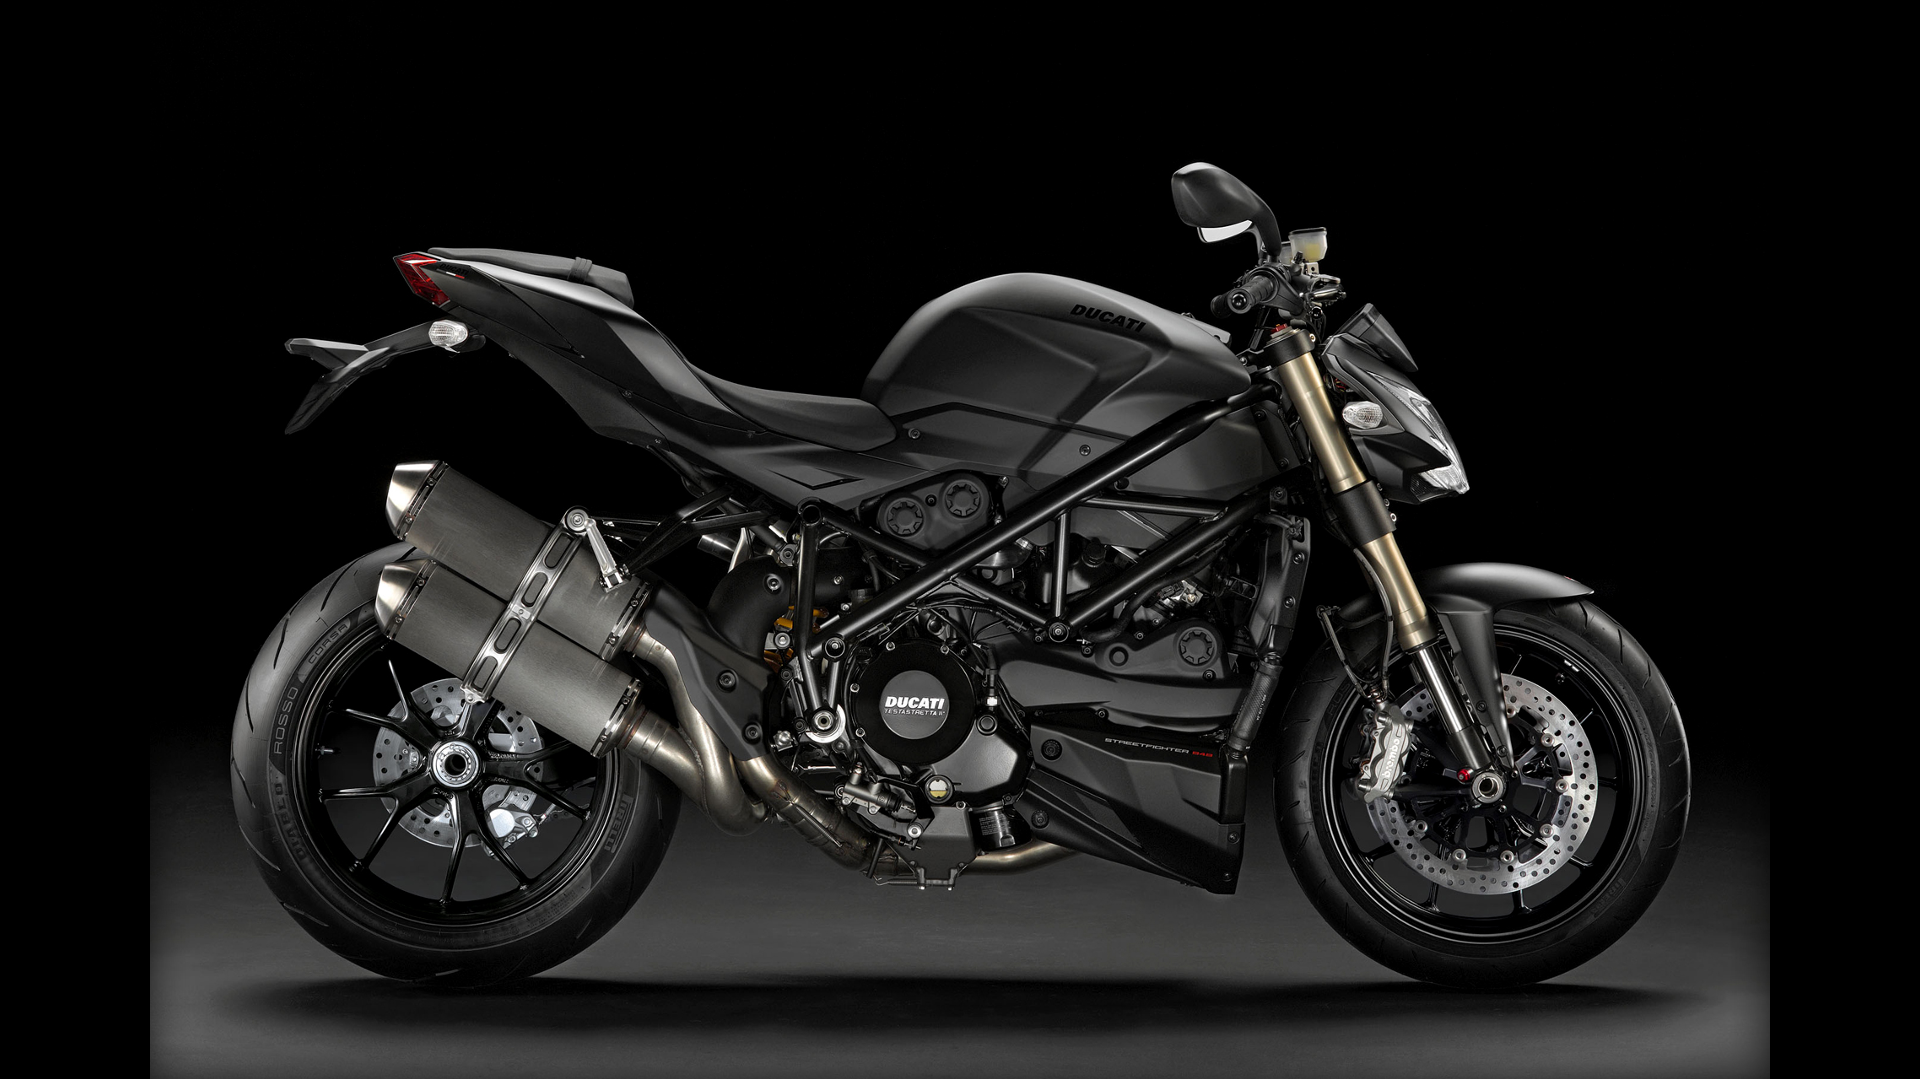 Ducati Naked Bike Full HD Wallpaper Motorcycle